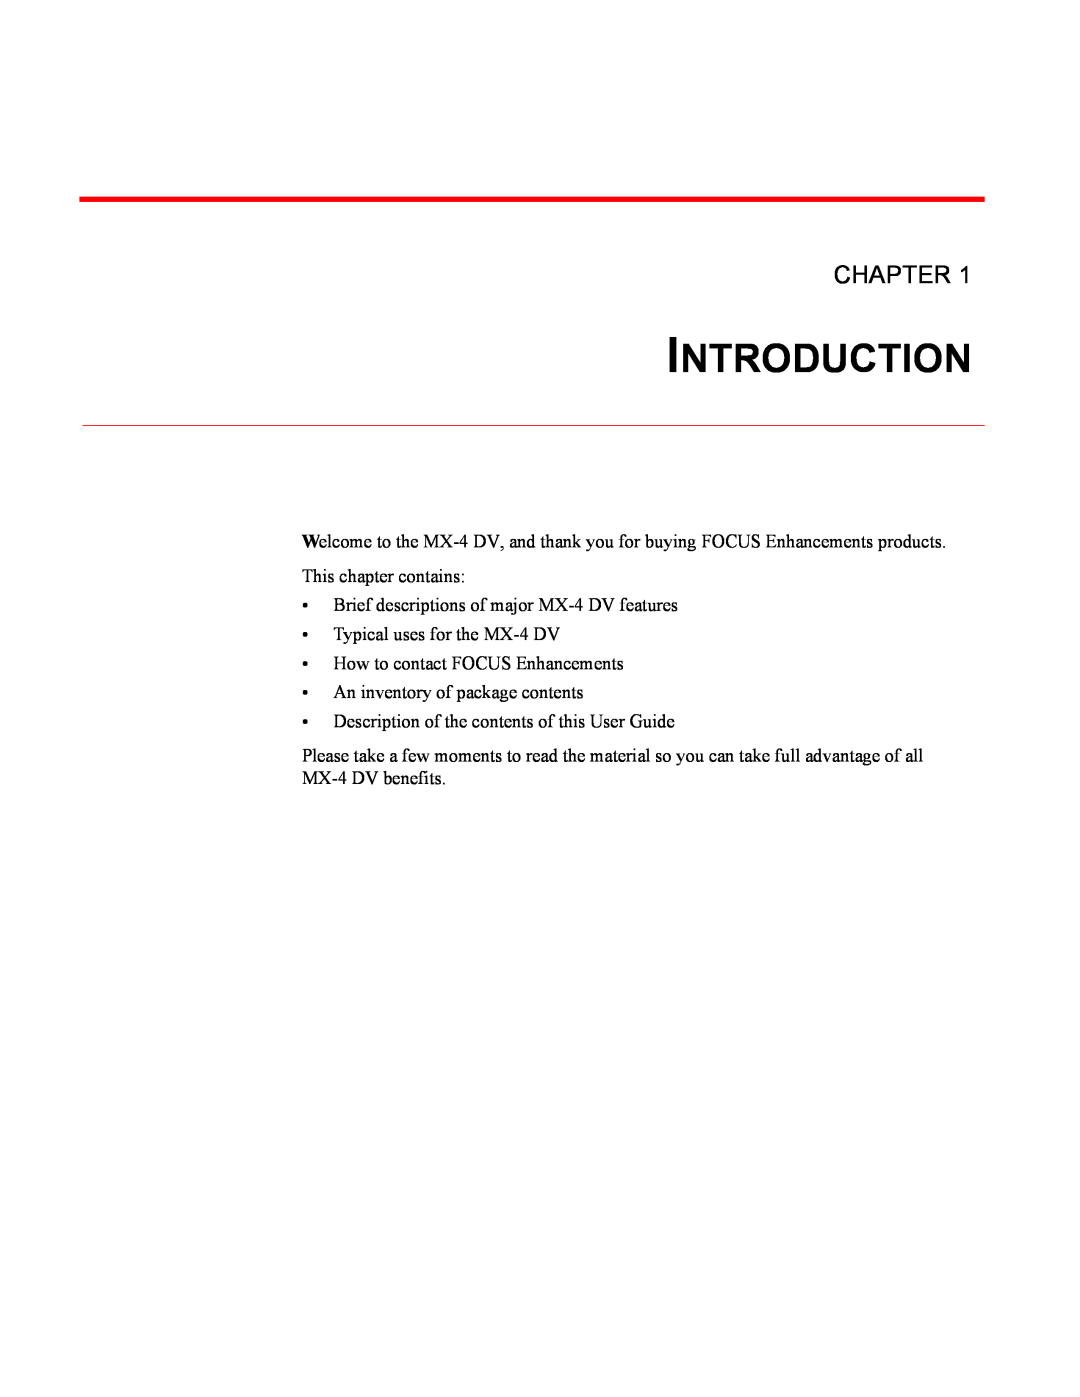 FOCUS Enhancements MX-4DV manual Introduction, Chapter 